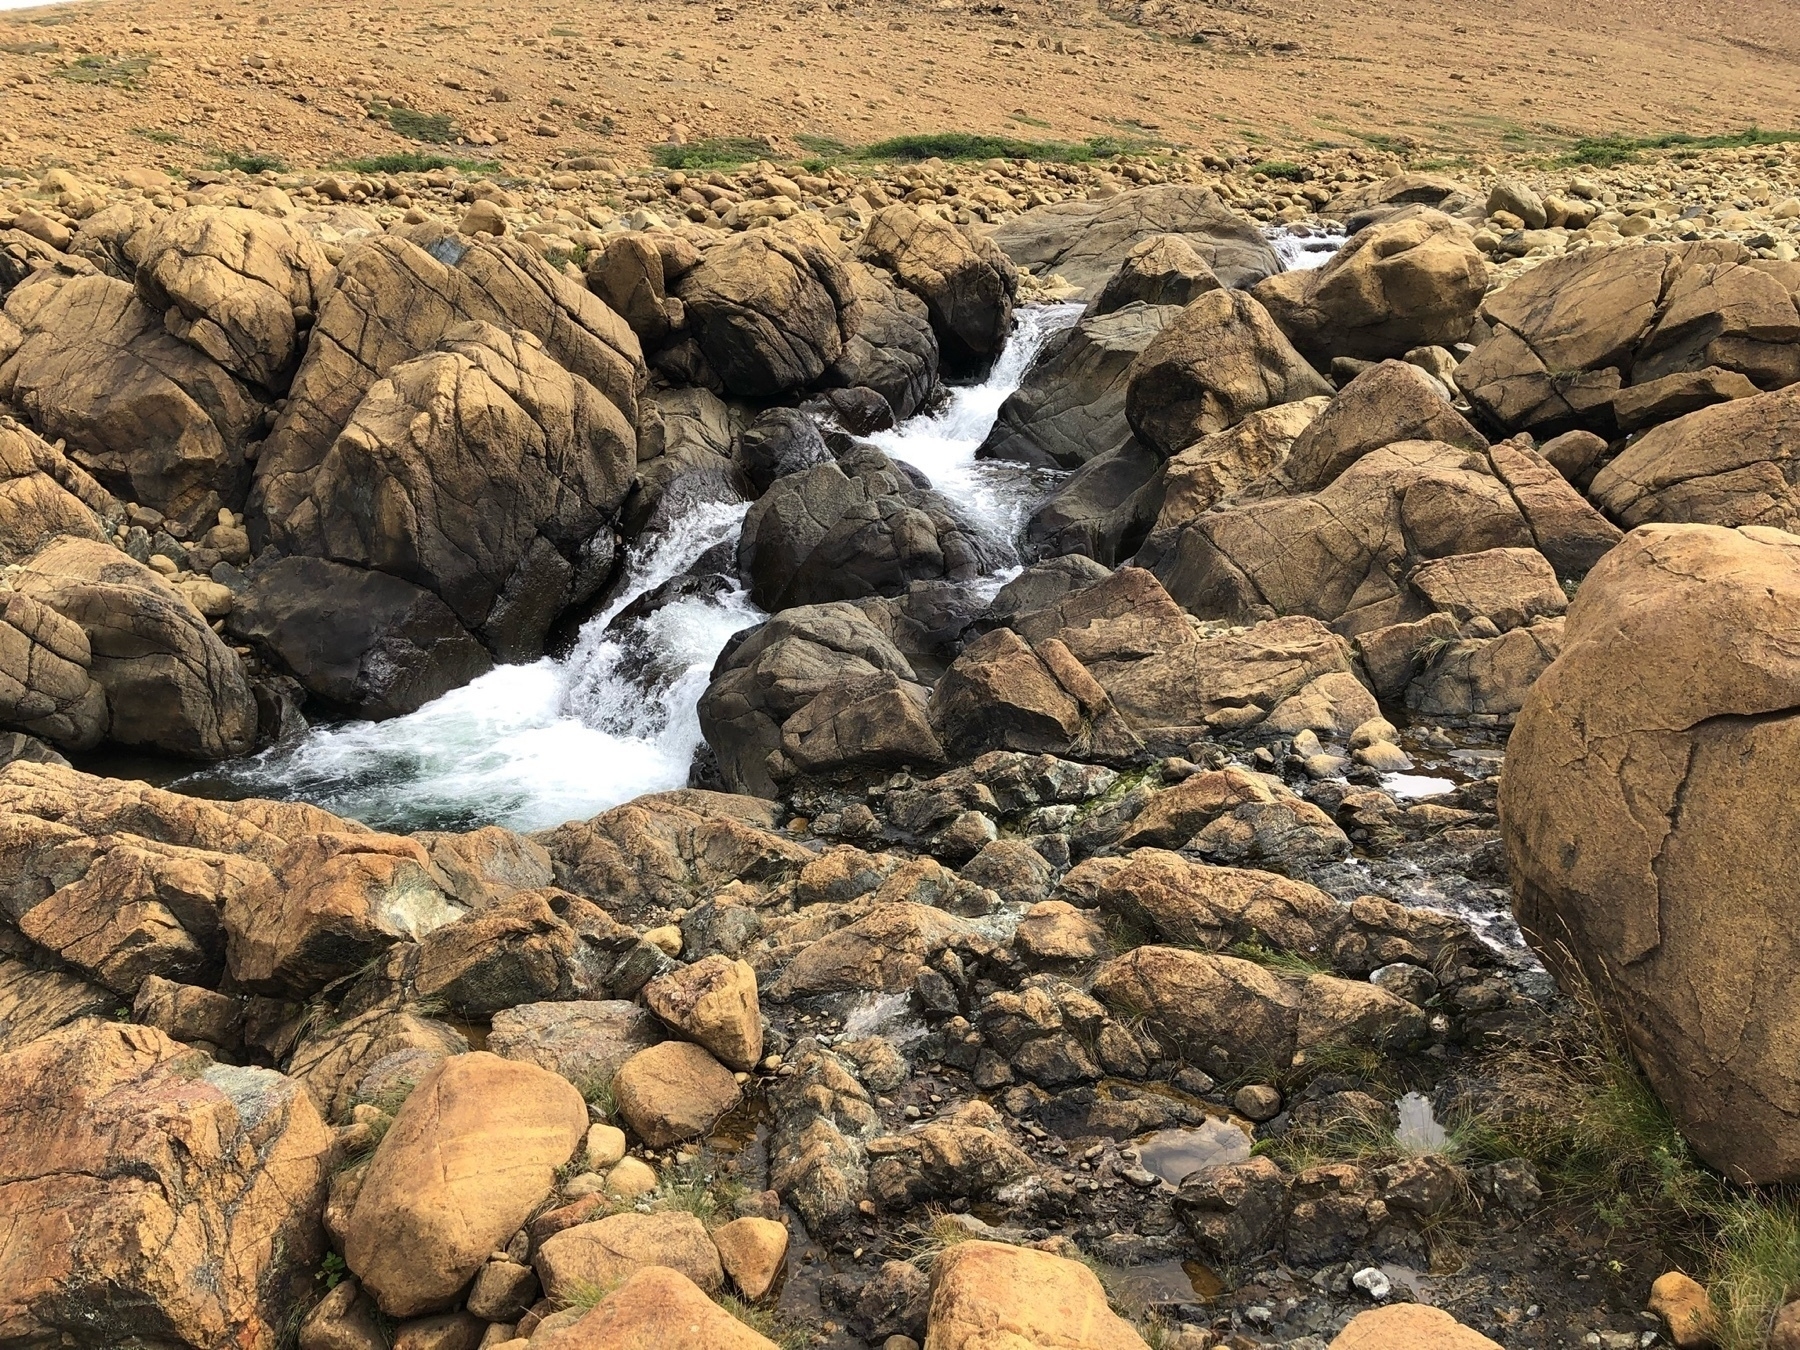 water flowing amongst rust-coloured rocks